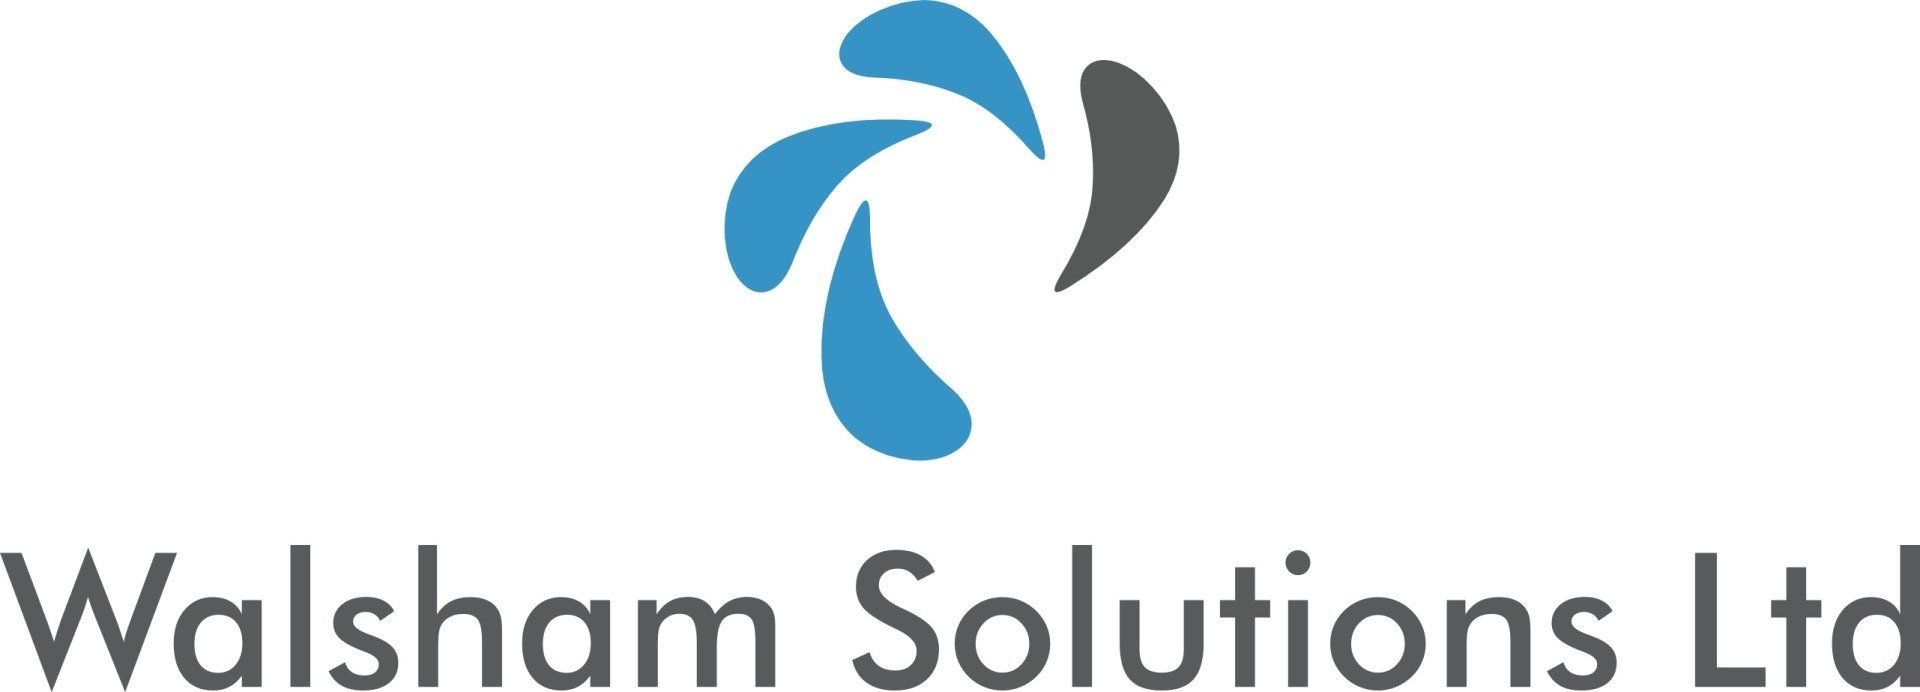 Walsham Solutions Ltd logo